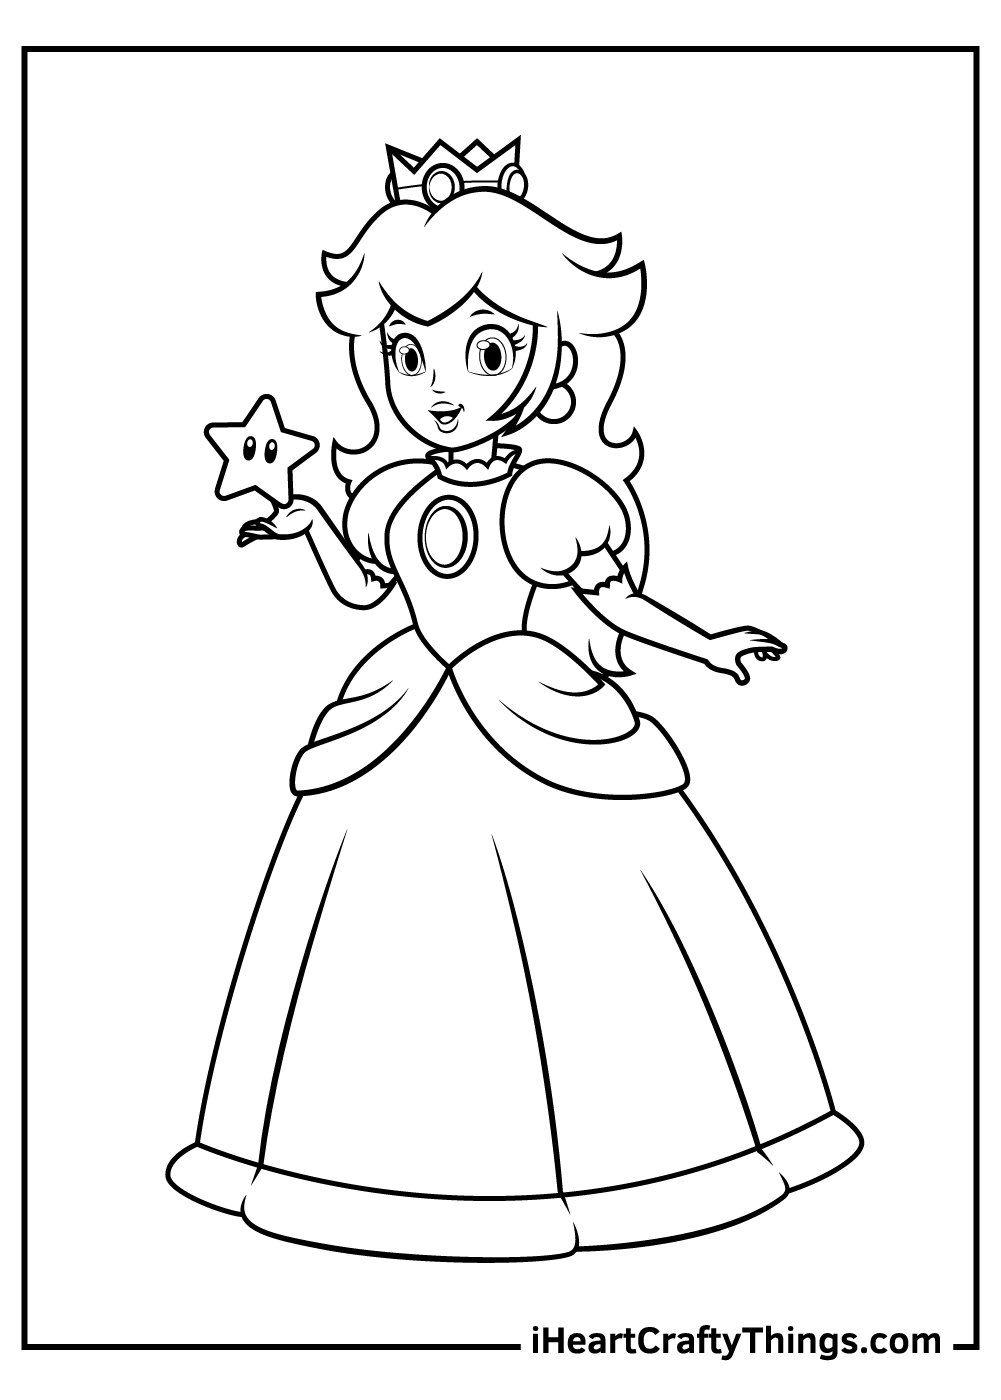 Mario princess peach coloring pages